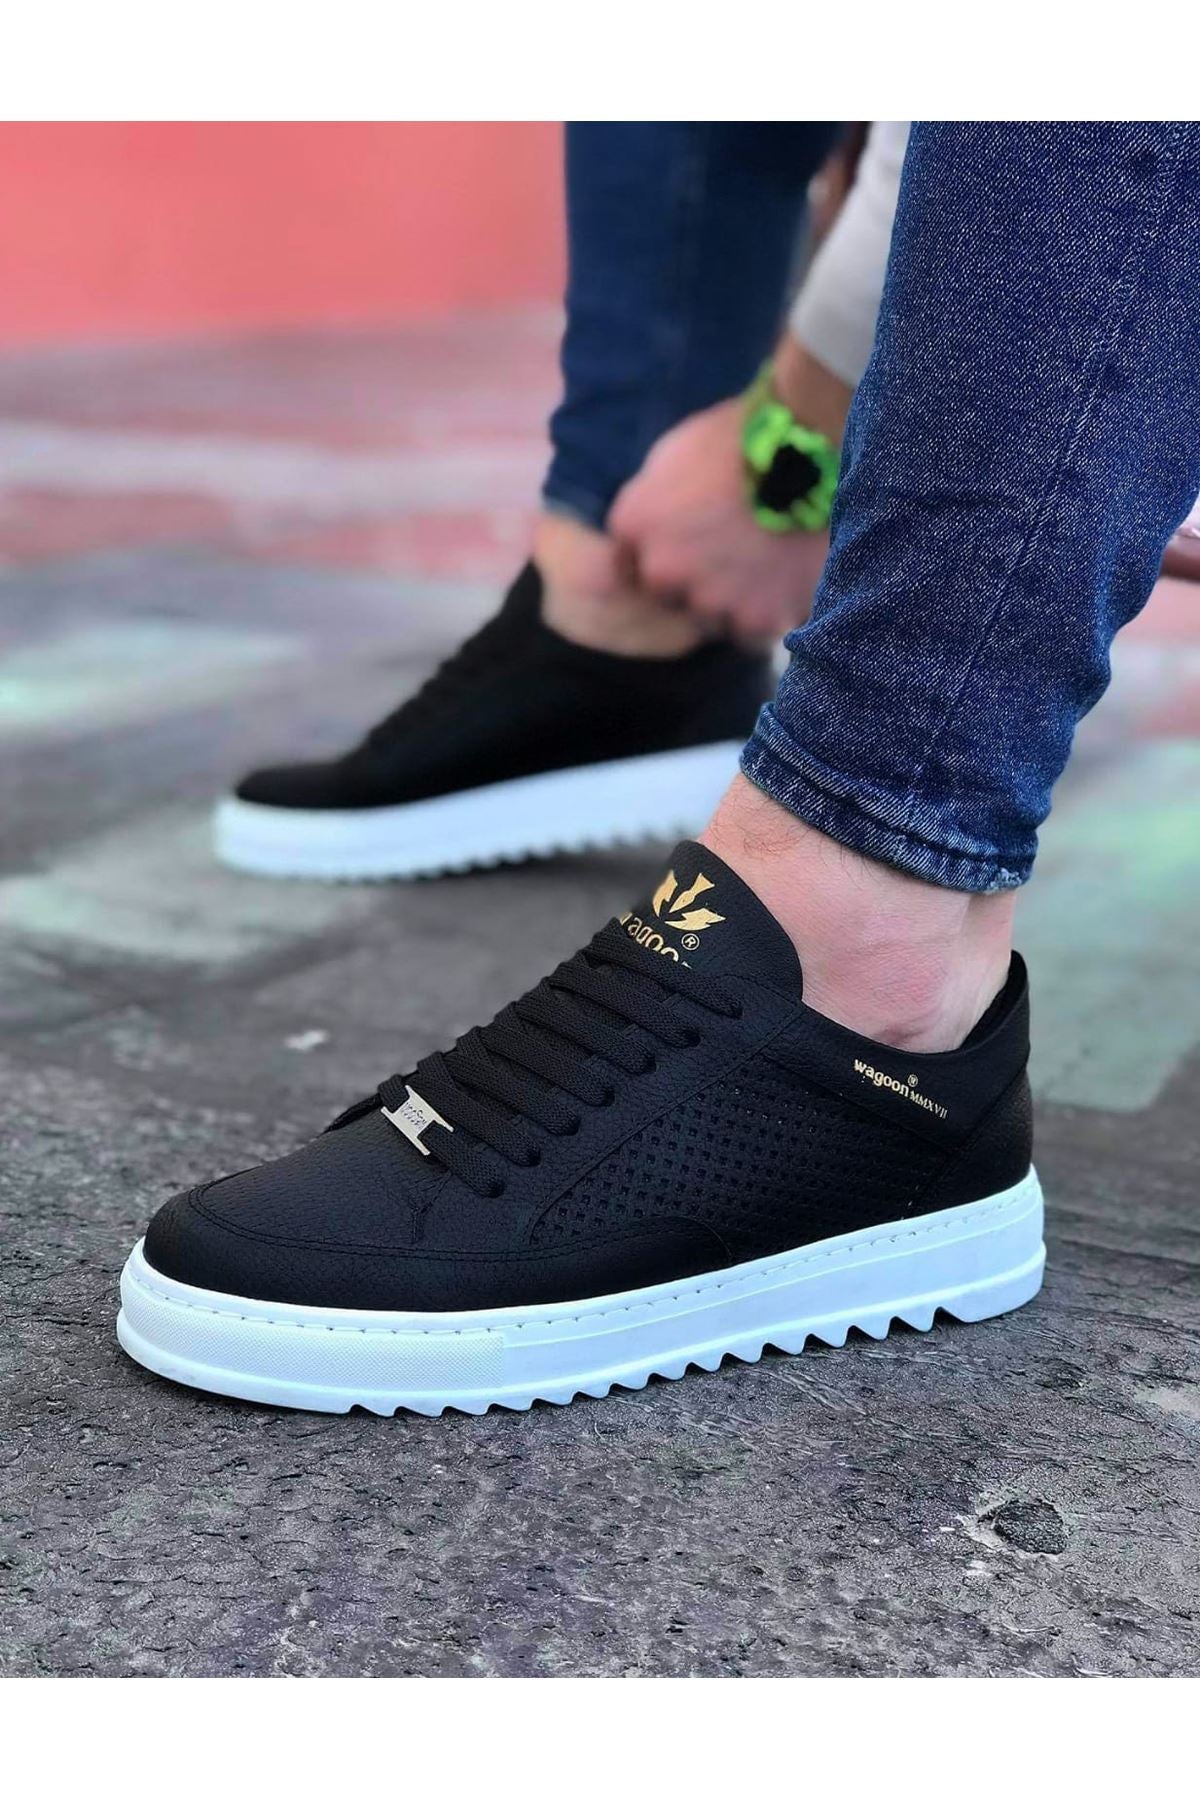 WG505 Black TR Men's Casual Shoes sneakers - STREETMODE™